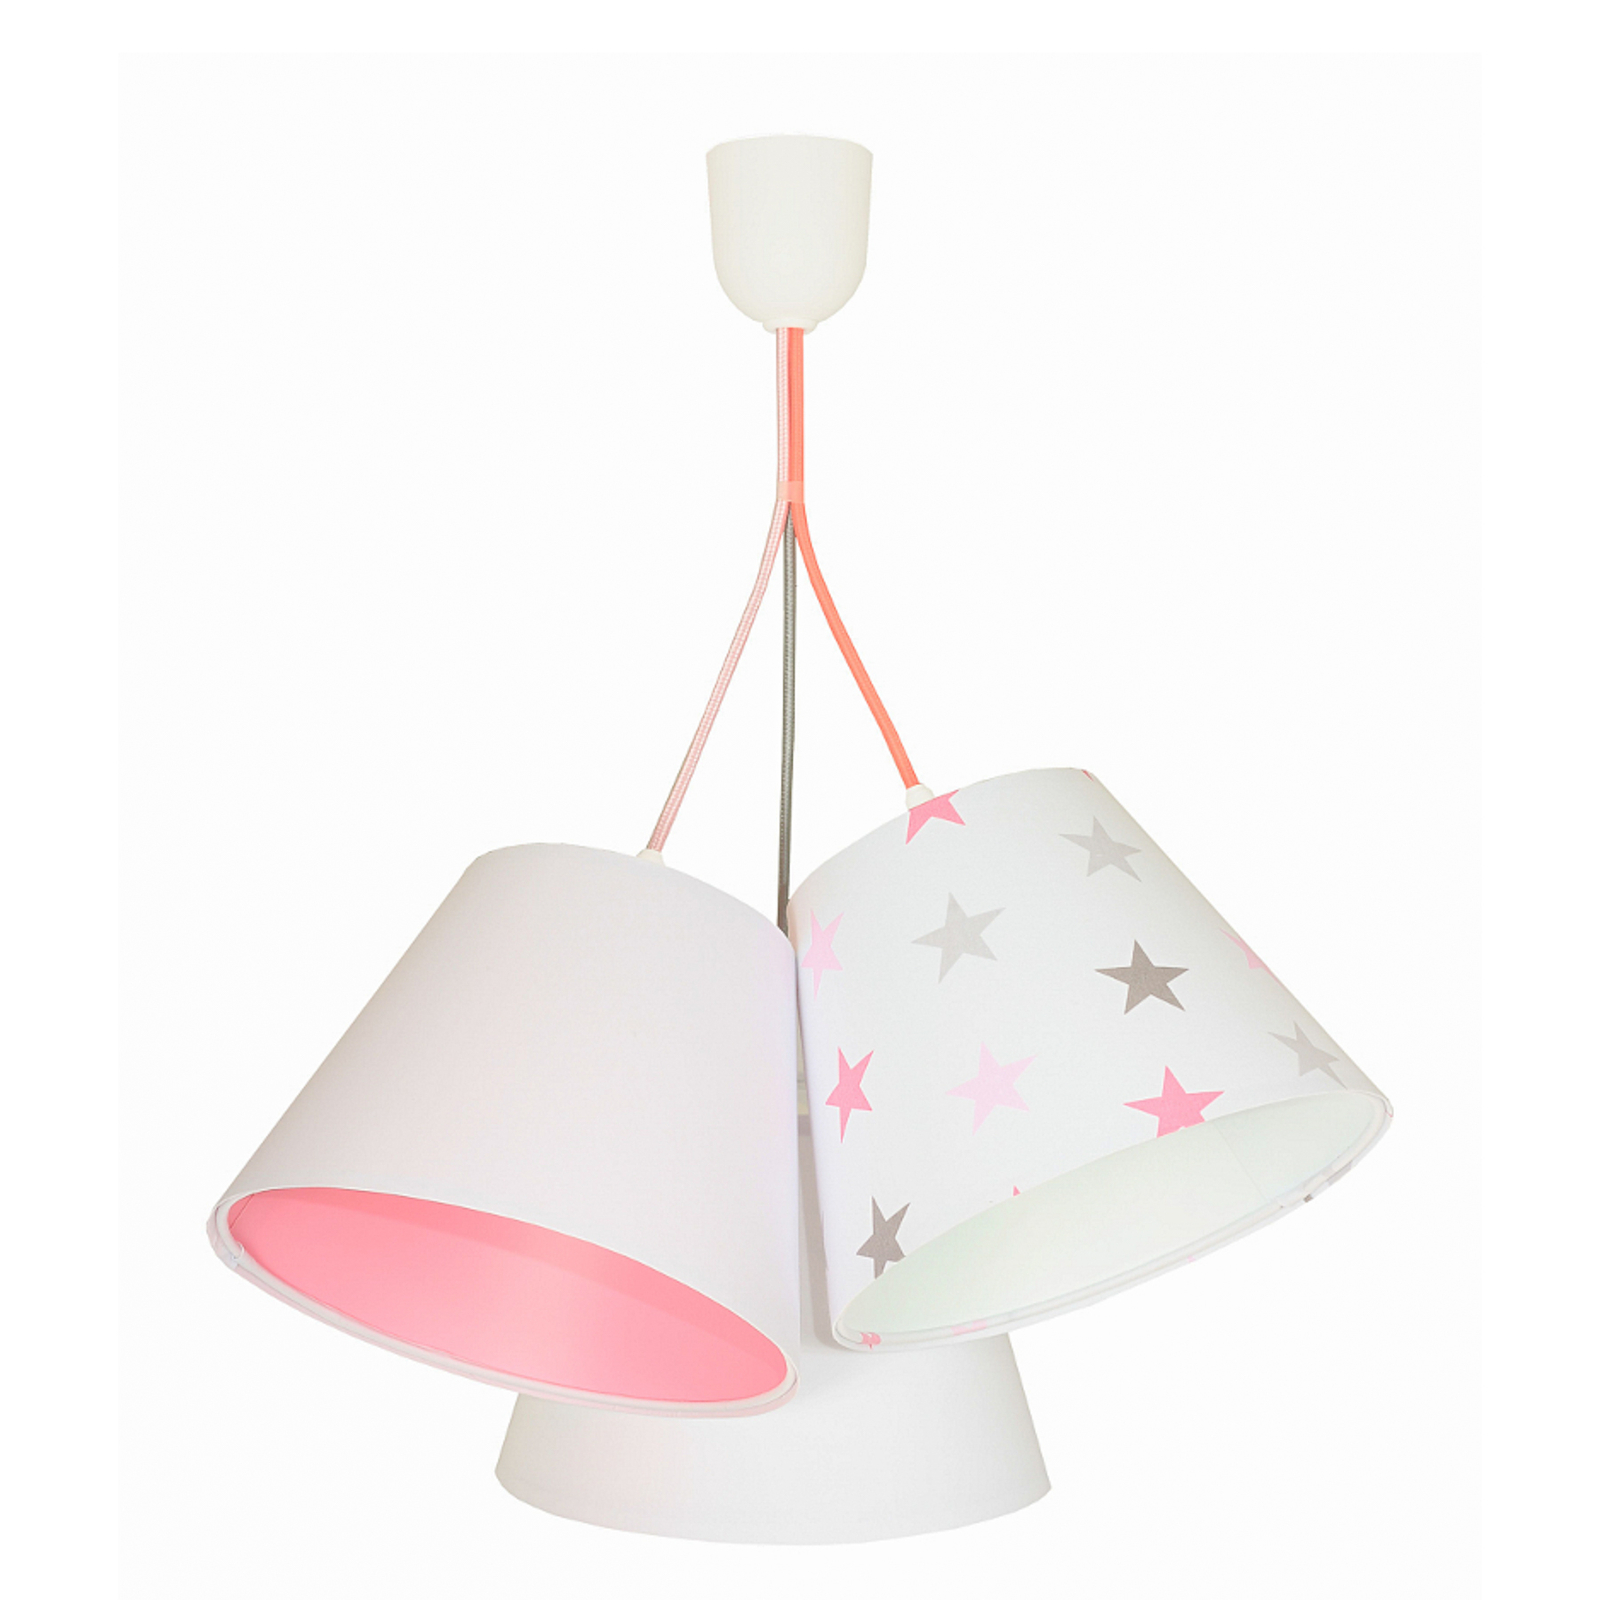 Kinderkamer hanglamp Zsofia 3-lamps wit/roze